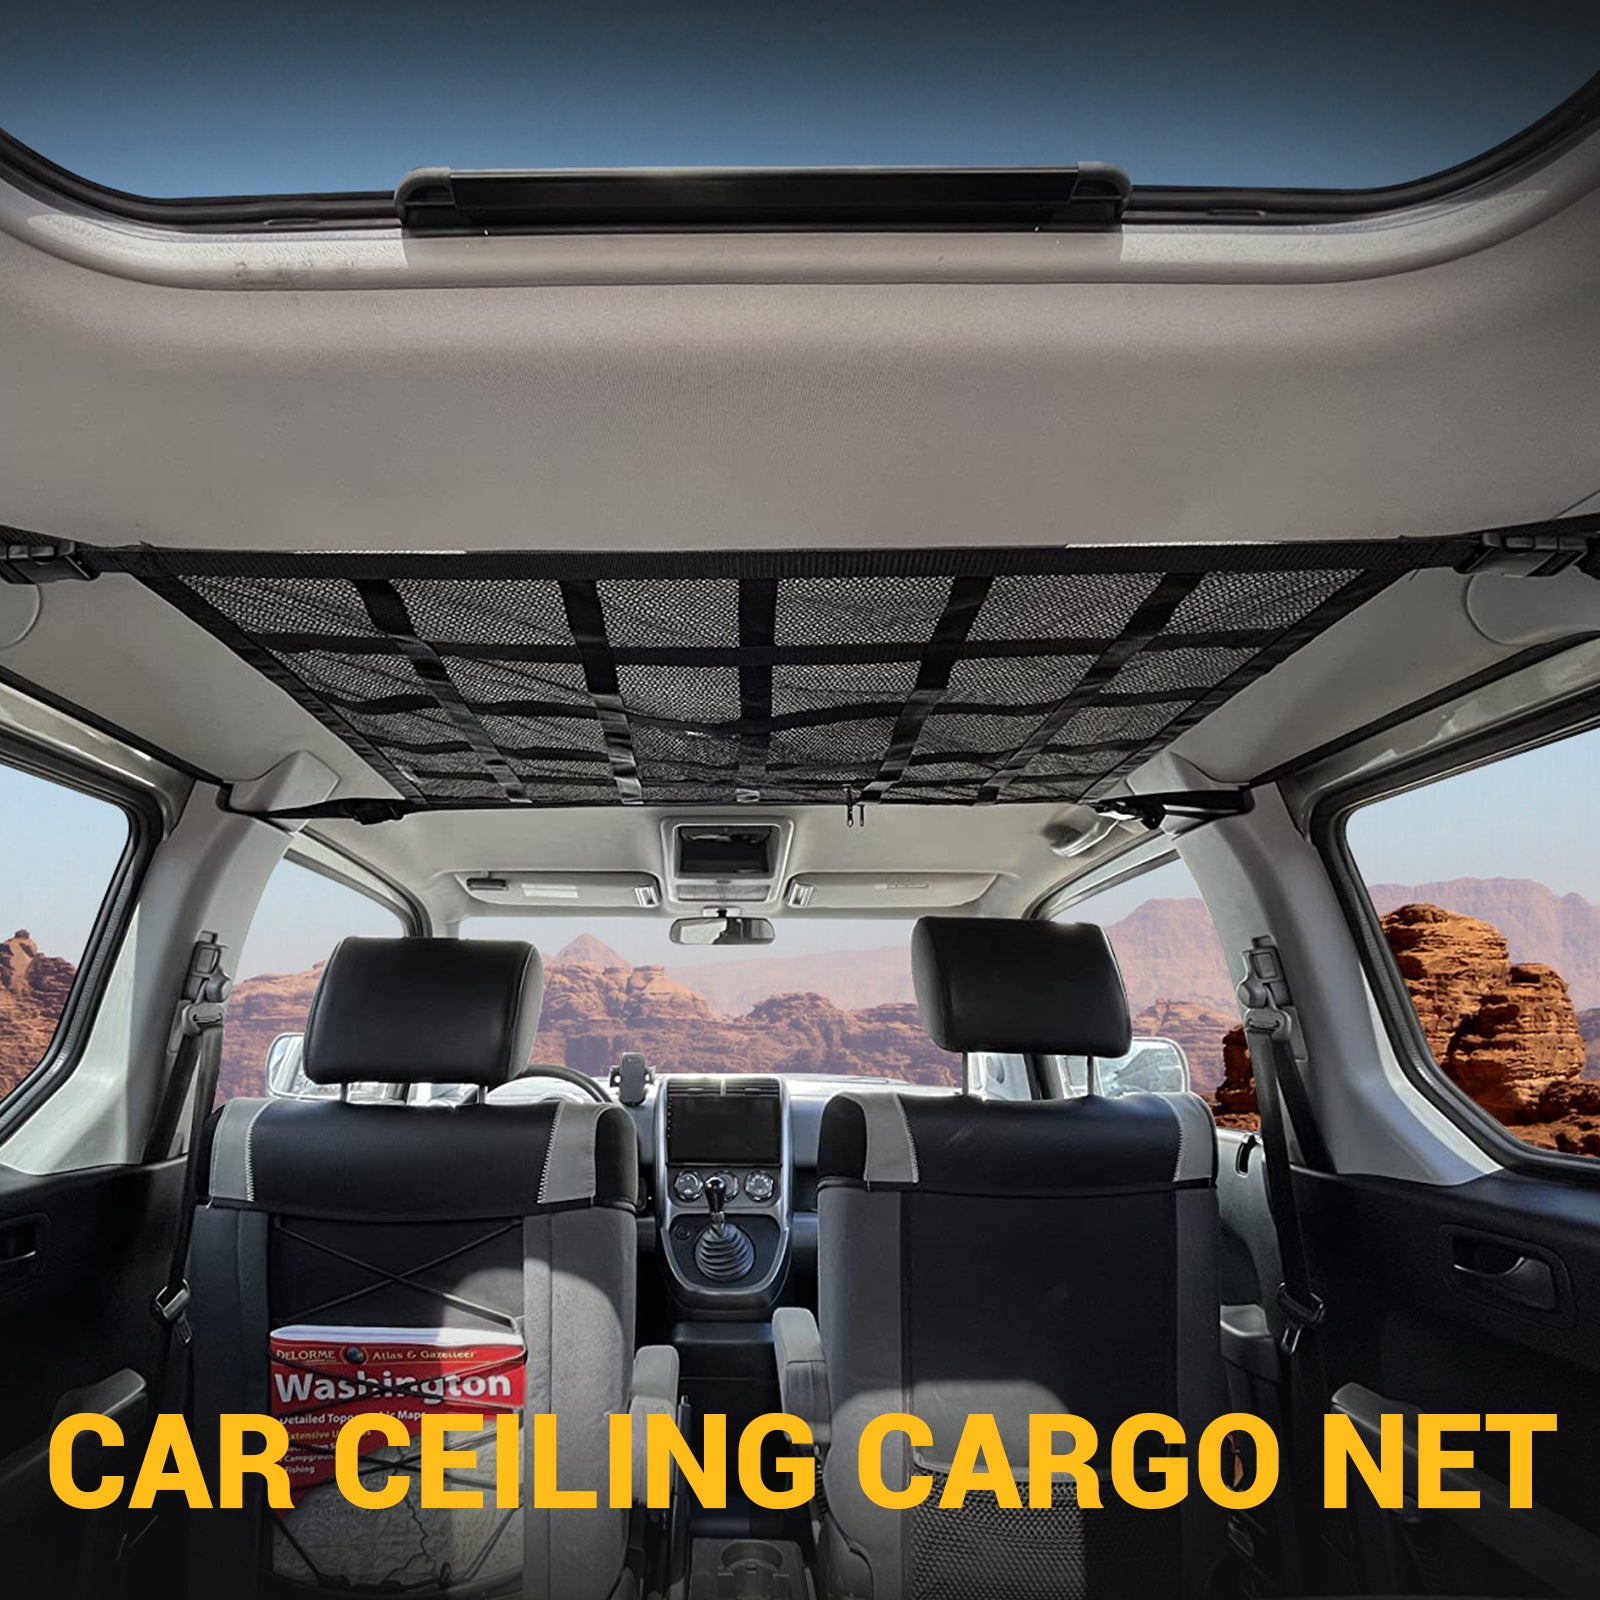 Byredio Car Ceiling Cargo Net - Car Cargo Net Roof Organizer with  Adjustable Strap, Double Zipper, Double-Layer Mesh Car Ceiling Cargo Net  for Most Car SUV MPV Truck